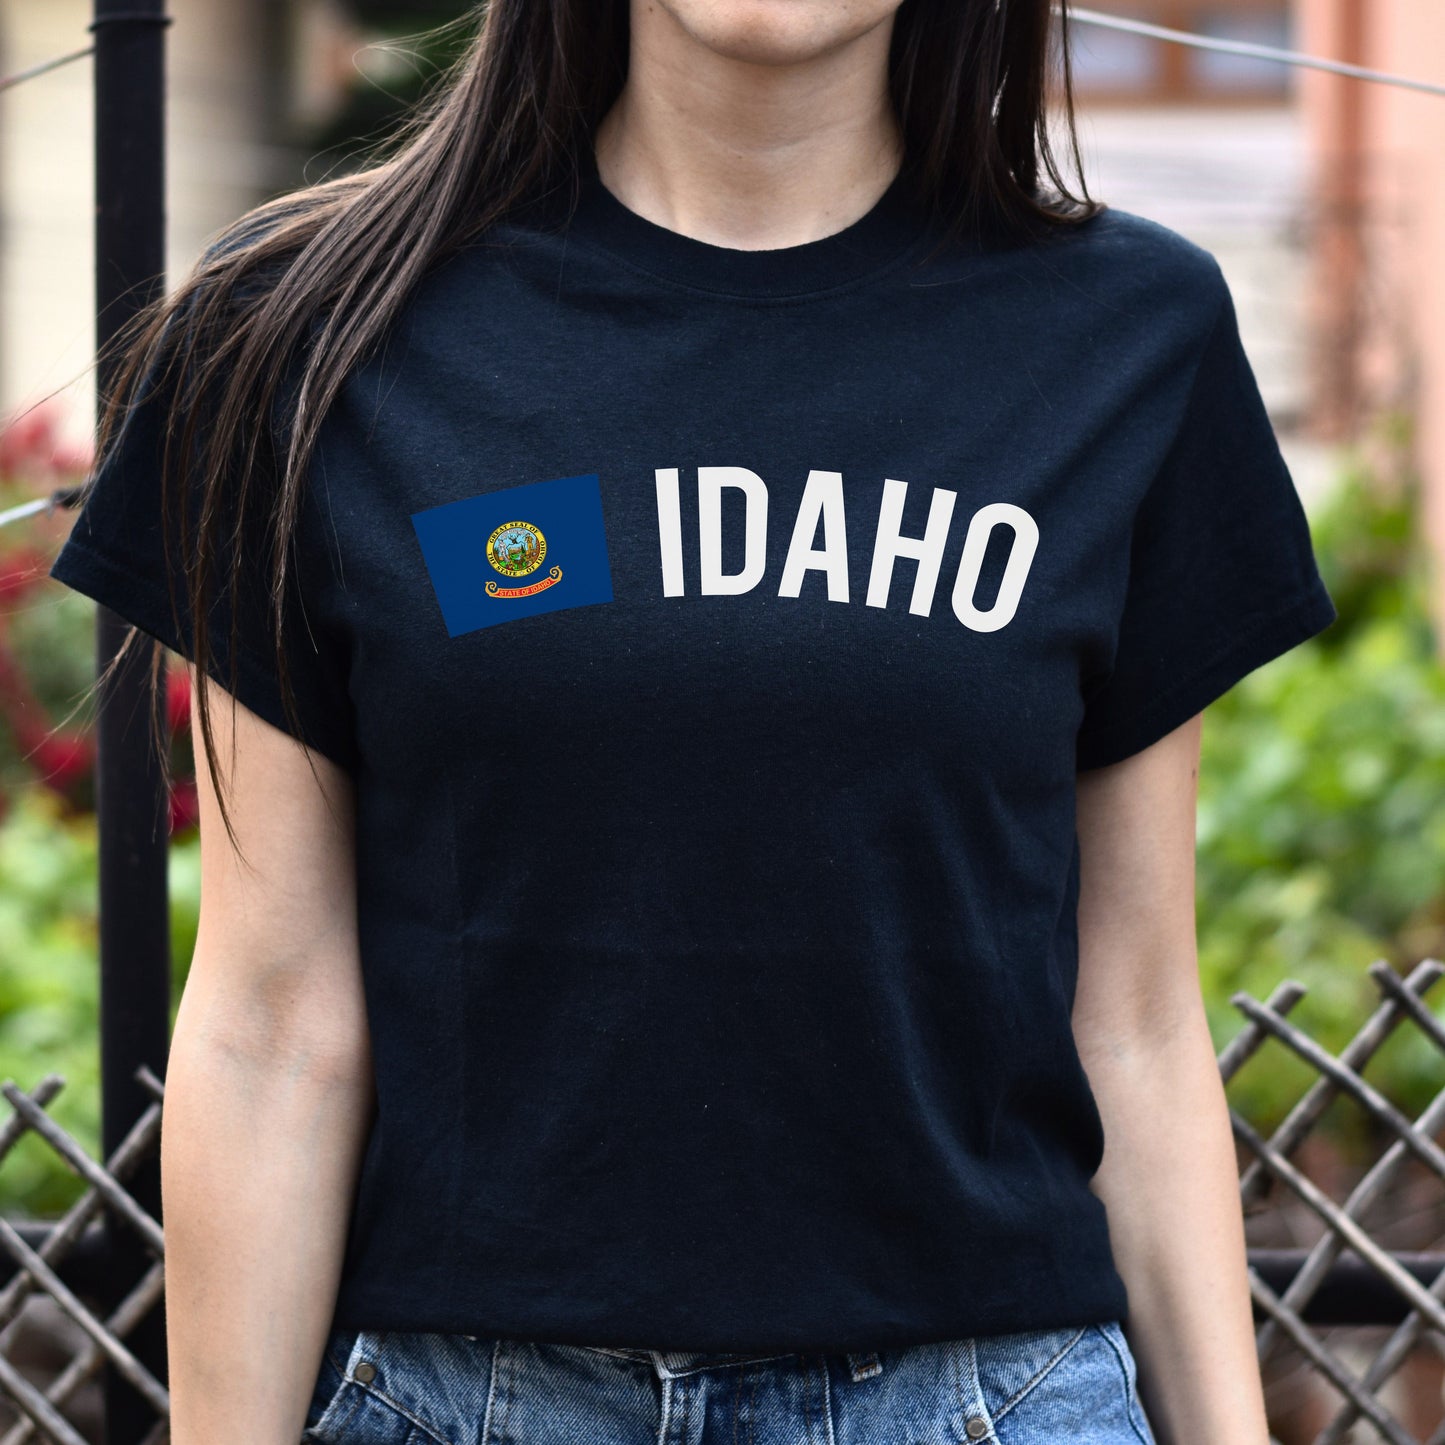 Idaho Unisex T-shirt gift Idaho flag tee Boise Meridian Nampa White Black-Black-Family-Gift-Planet